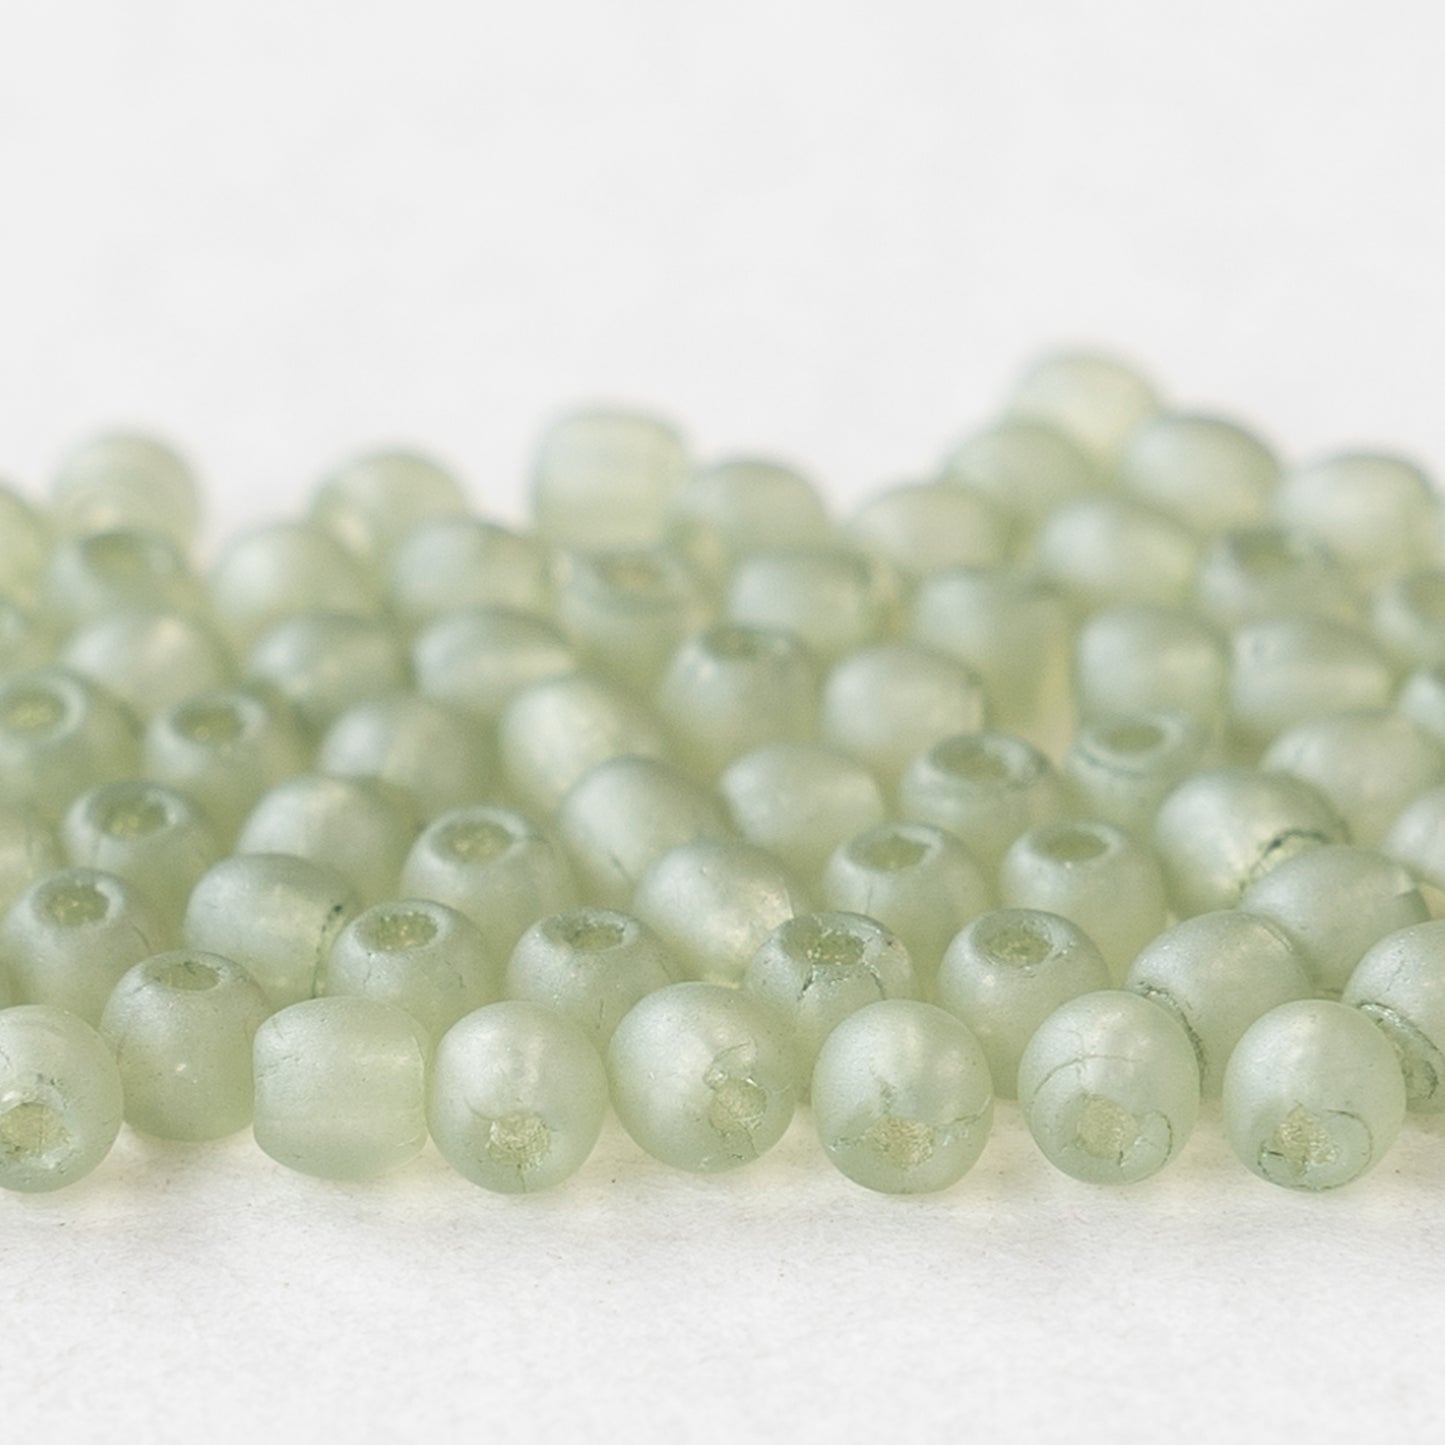 3mm Round Glass Beads - Celadon Green - 120 Beads